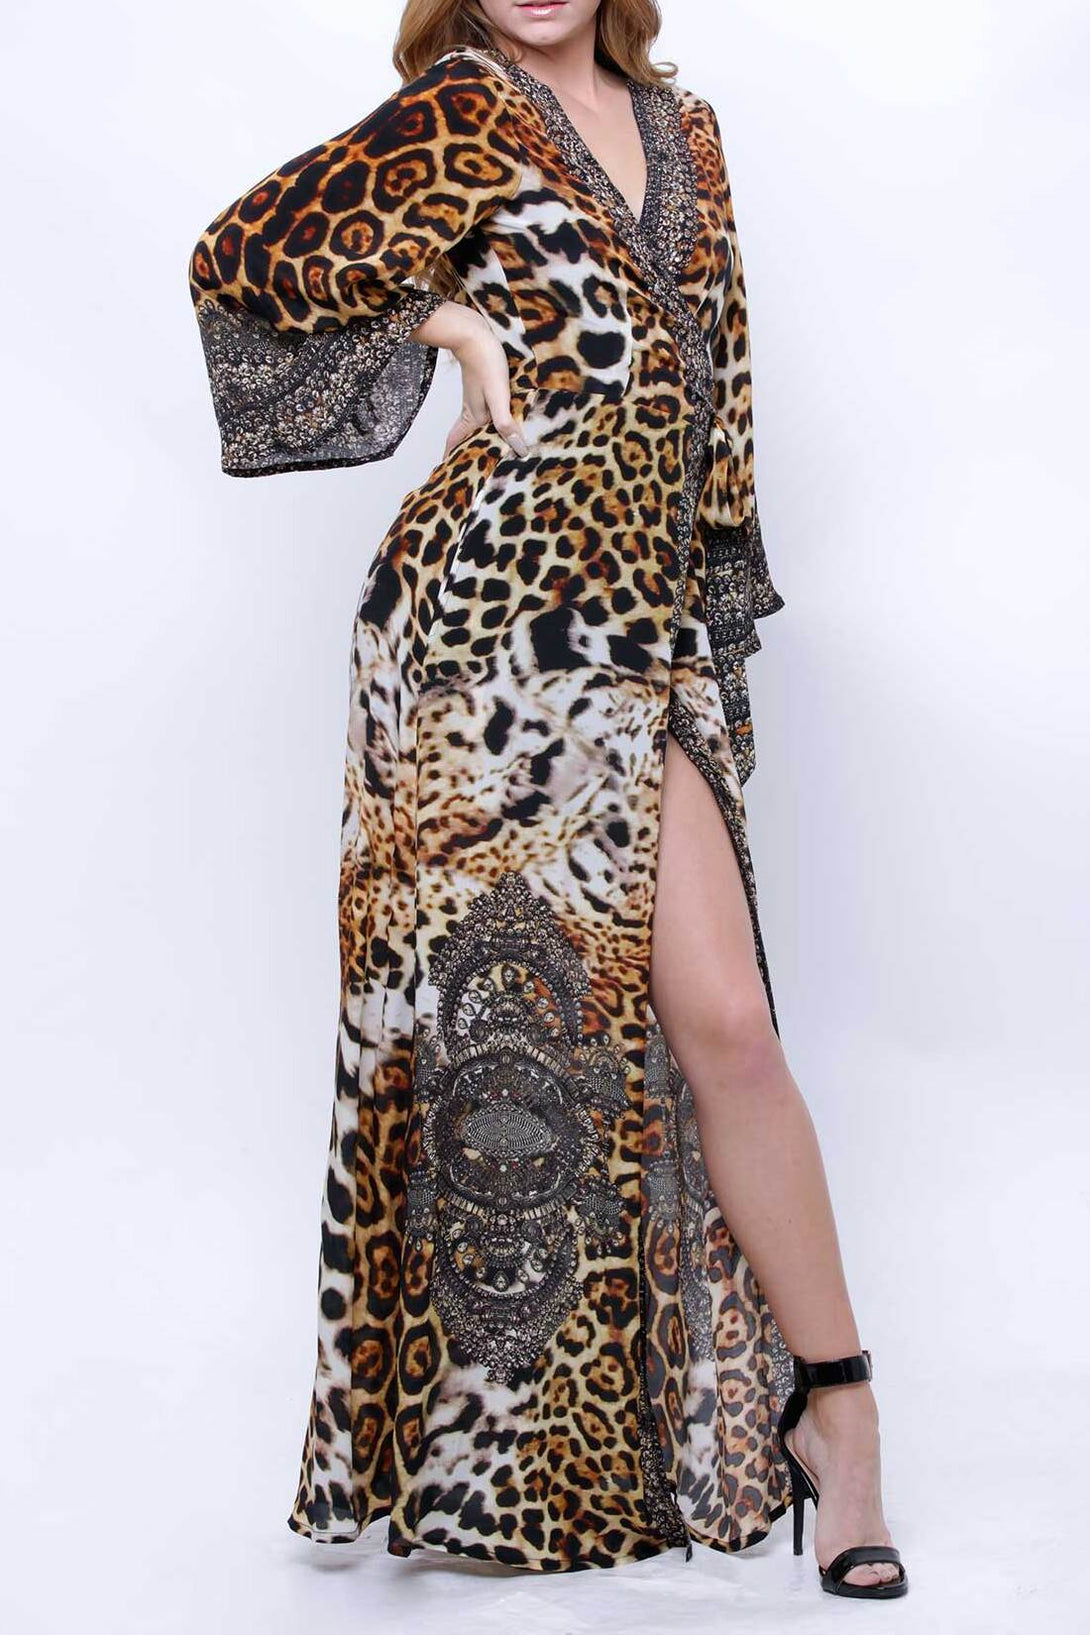 "Shahida Parides" "floor length wrap dress" "long wrap dress" "leopard print dress wrap"